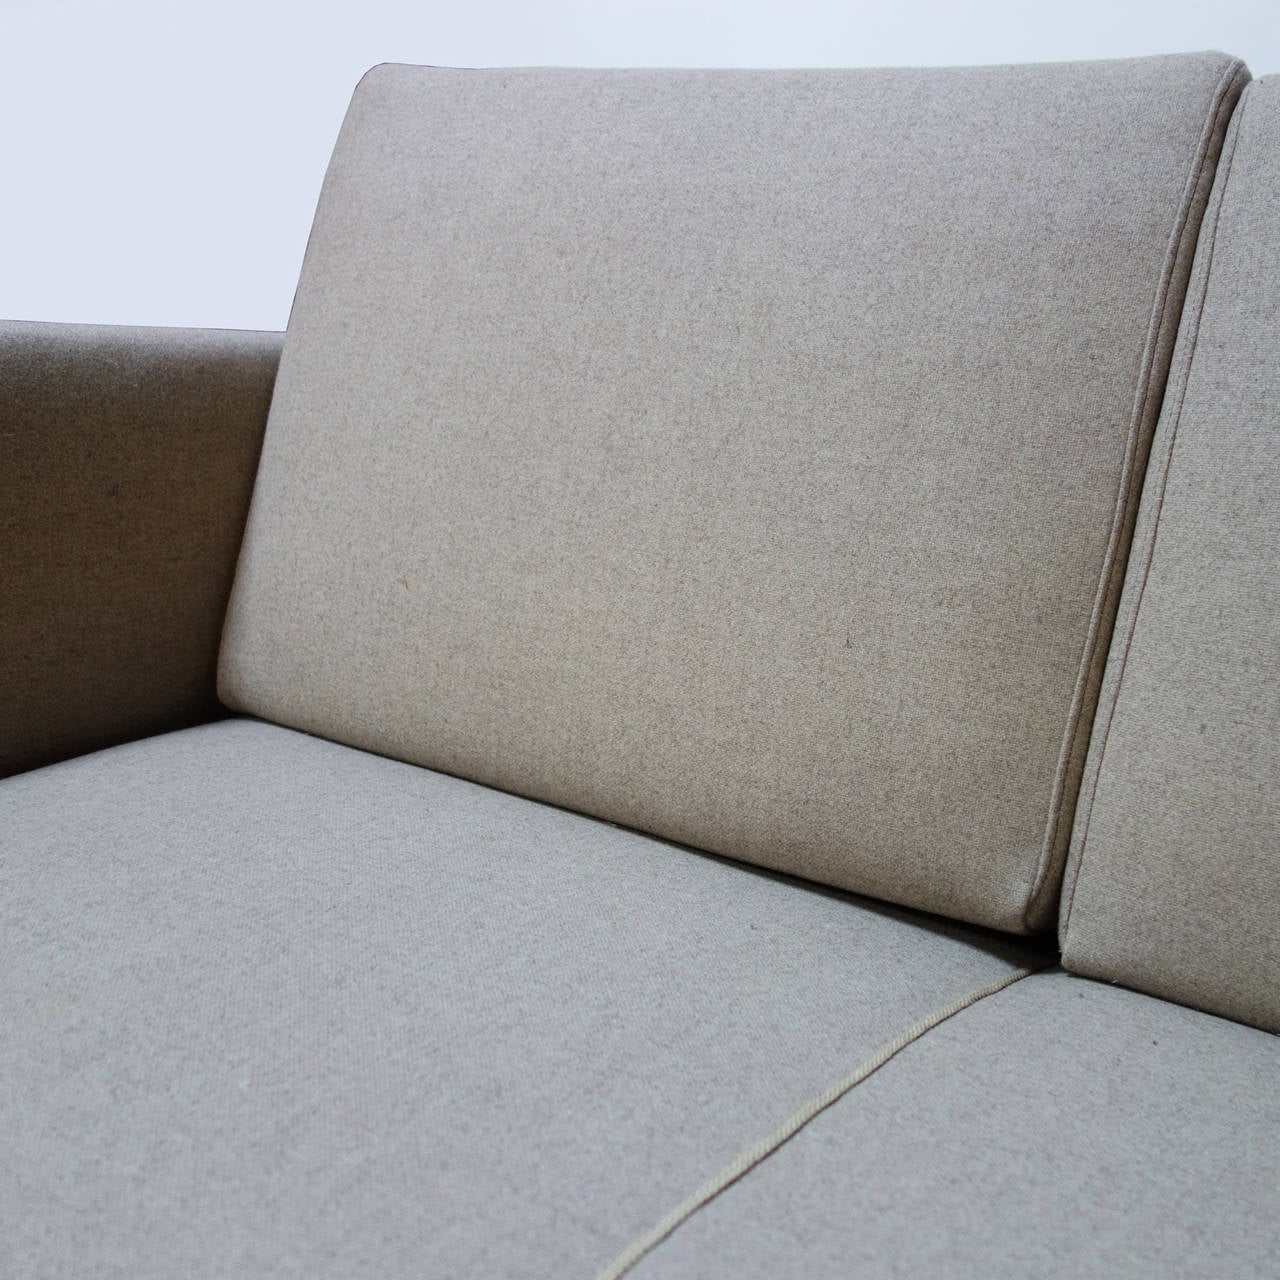 Patinated Elegant Sofa Model by Finn Juhl